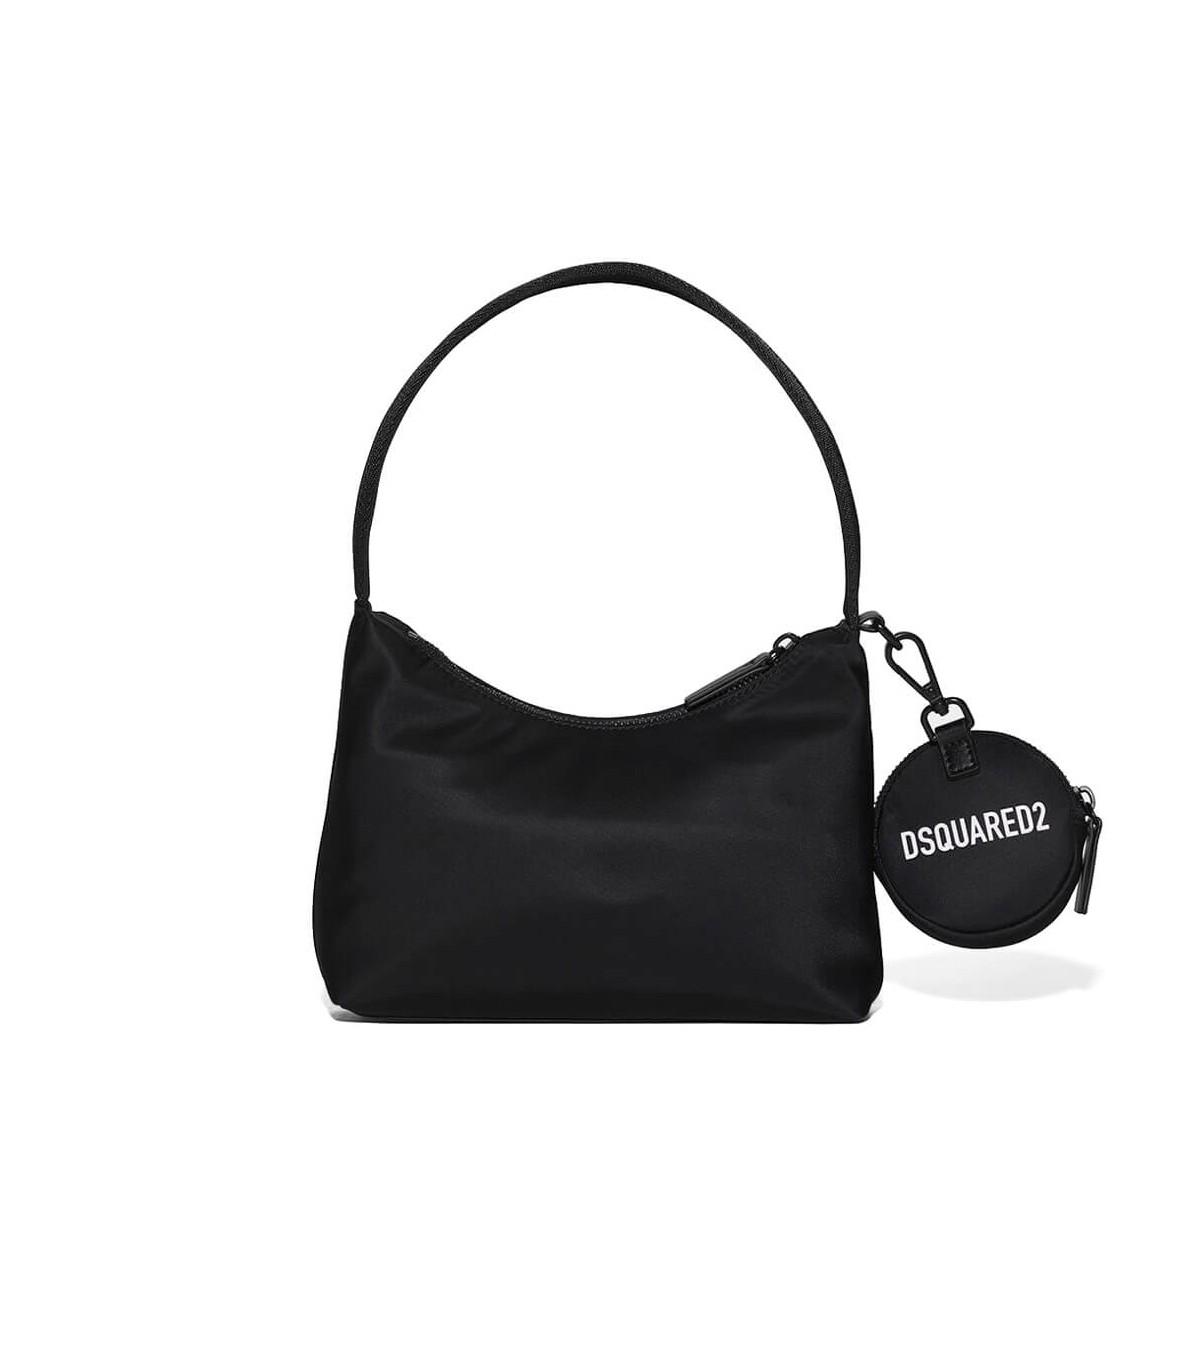 DSquared² Be Icon Shoulder Bag in Black | Lyst